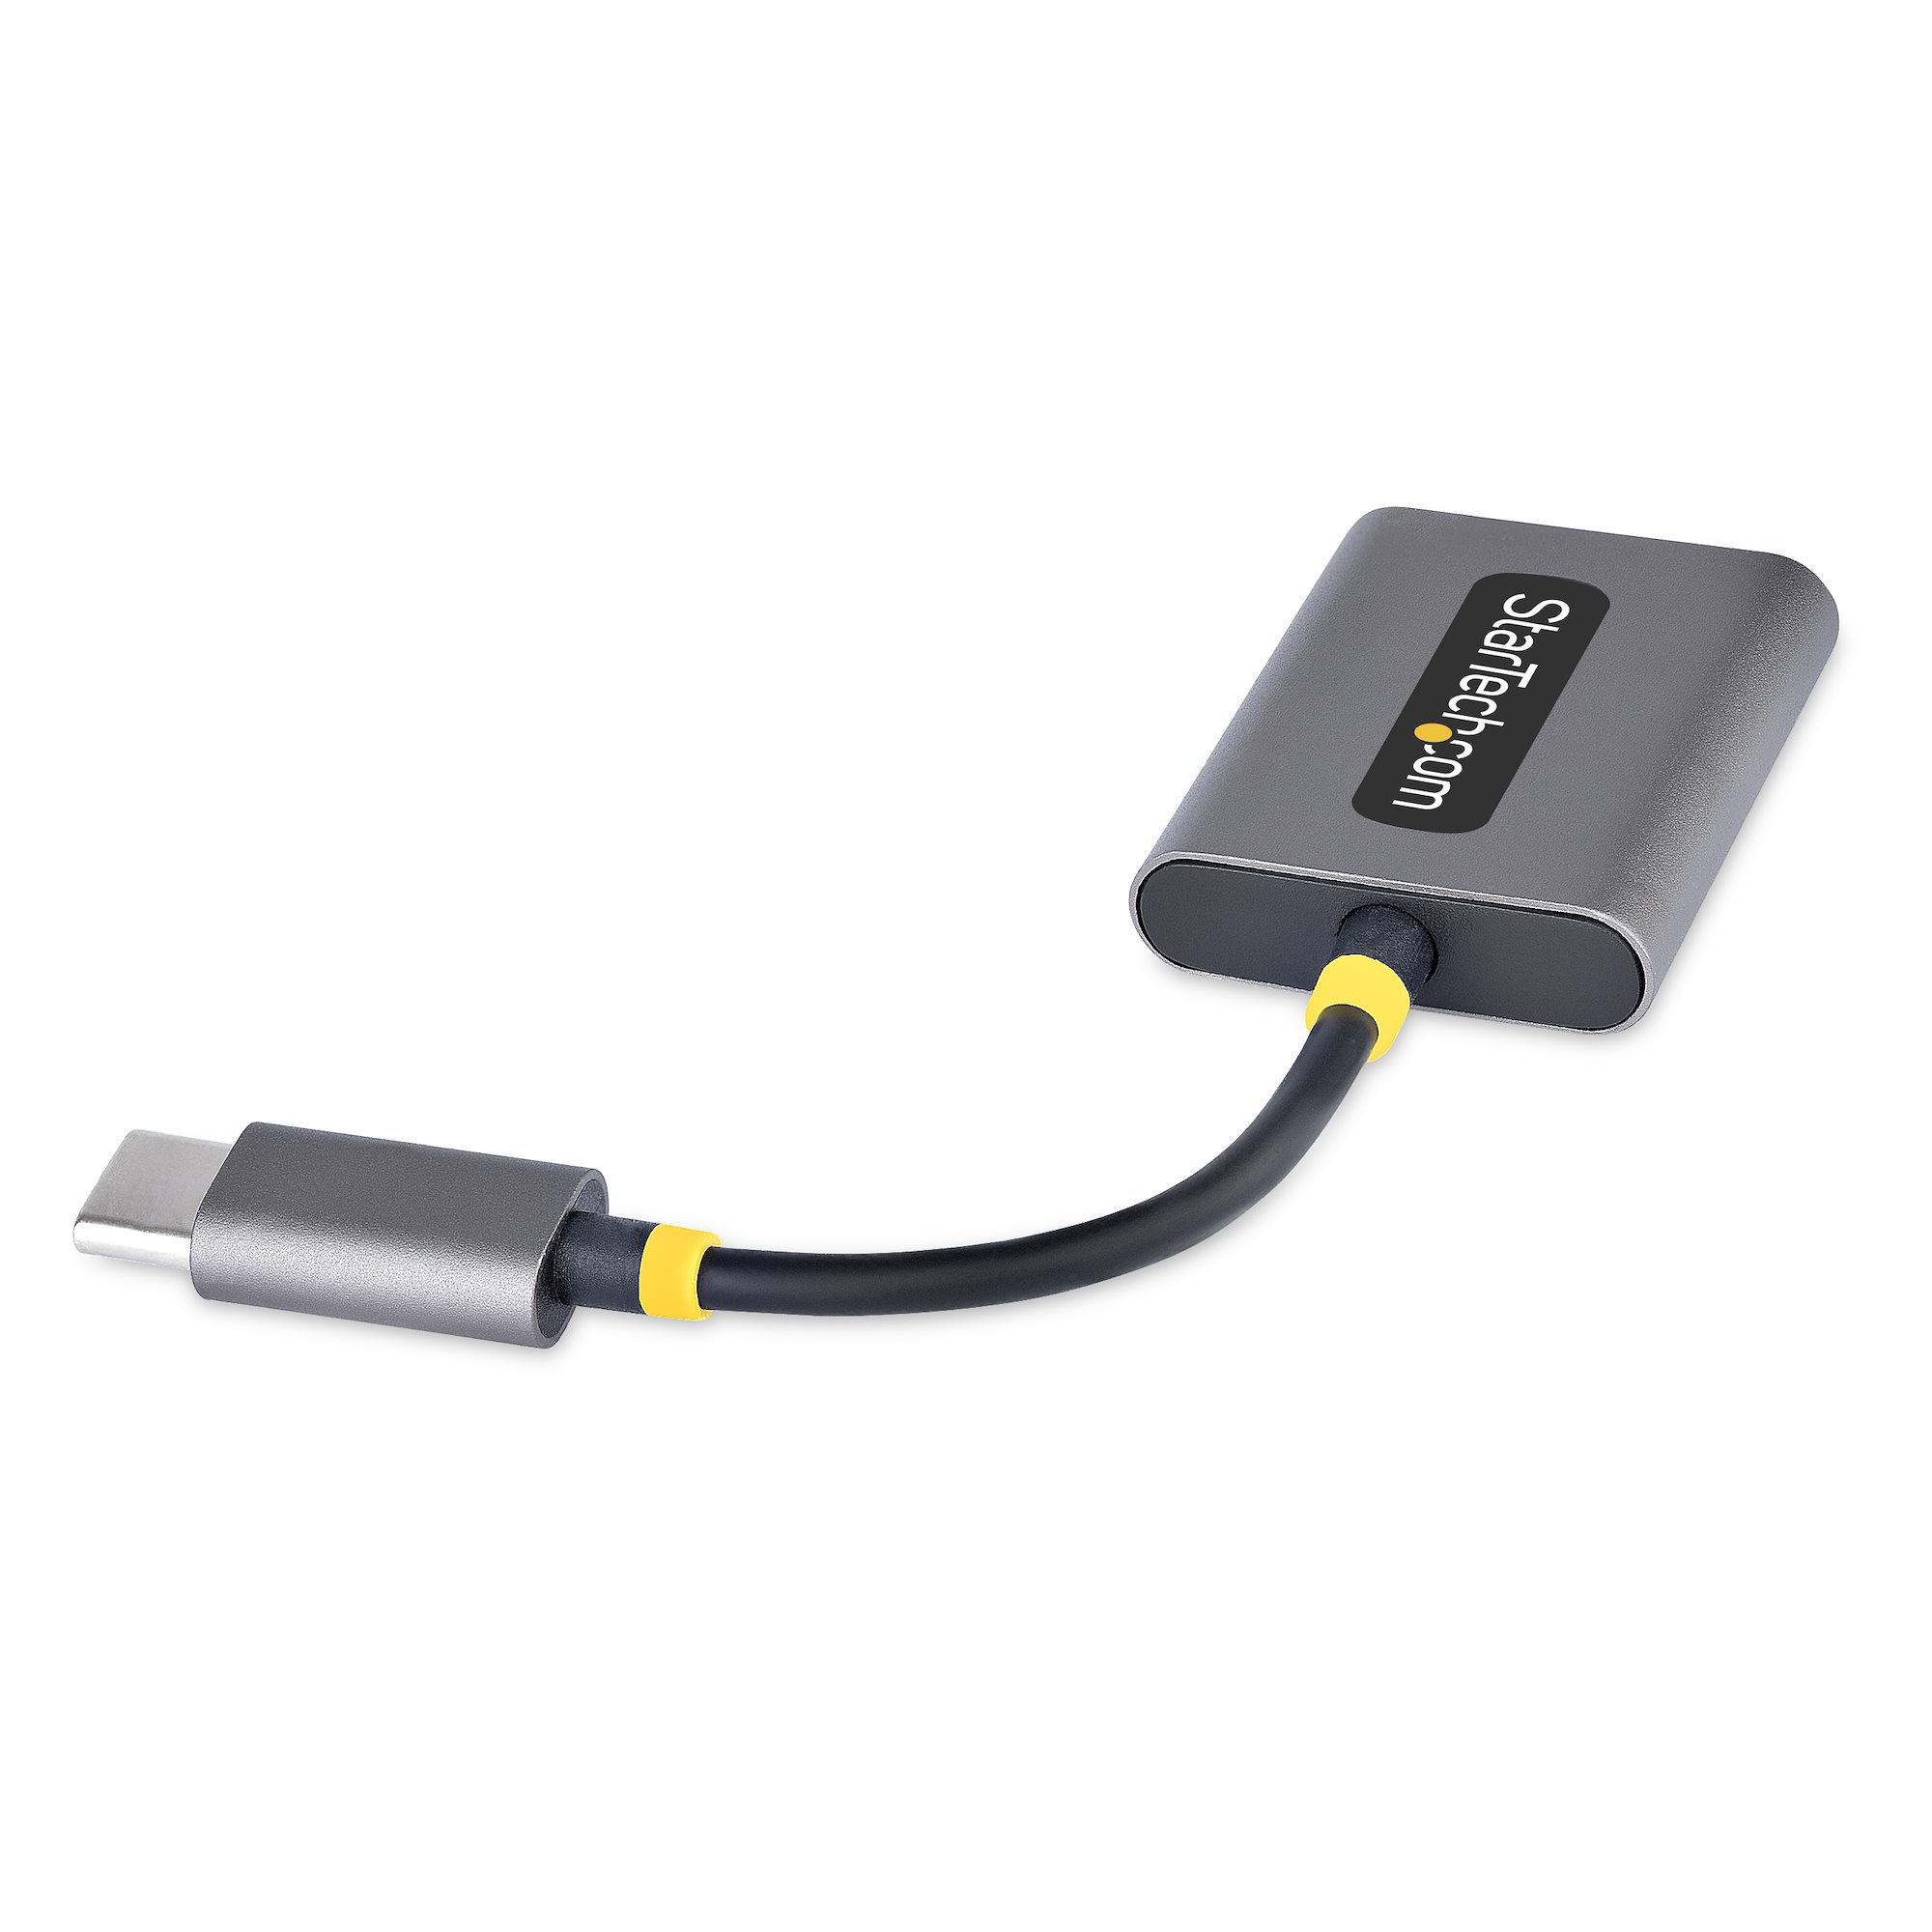 USB-C Headphone Splitter/Dongle with Mic - オーディオケーブル